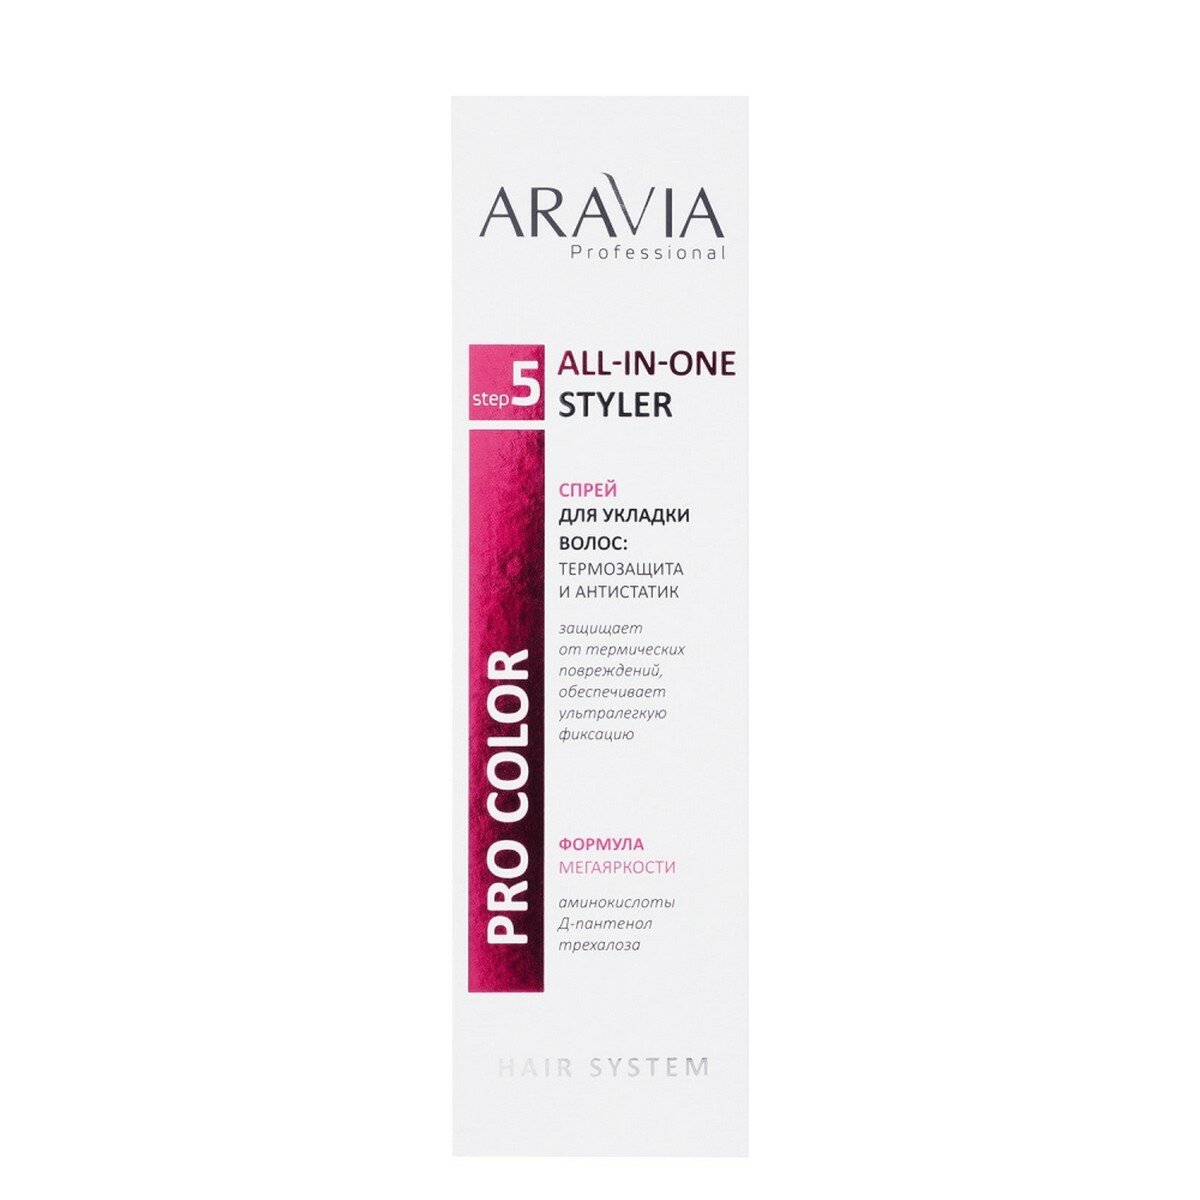 Aravia Professional Спрей для укладки волос: термозащита и антистатик All-In-One Styler, 150 мл (Aravia Professional, ) - фото №15